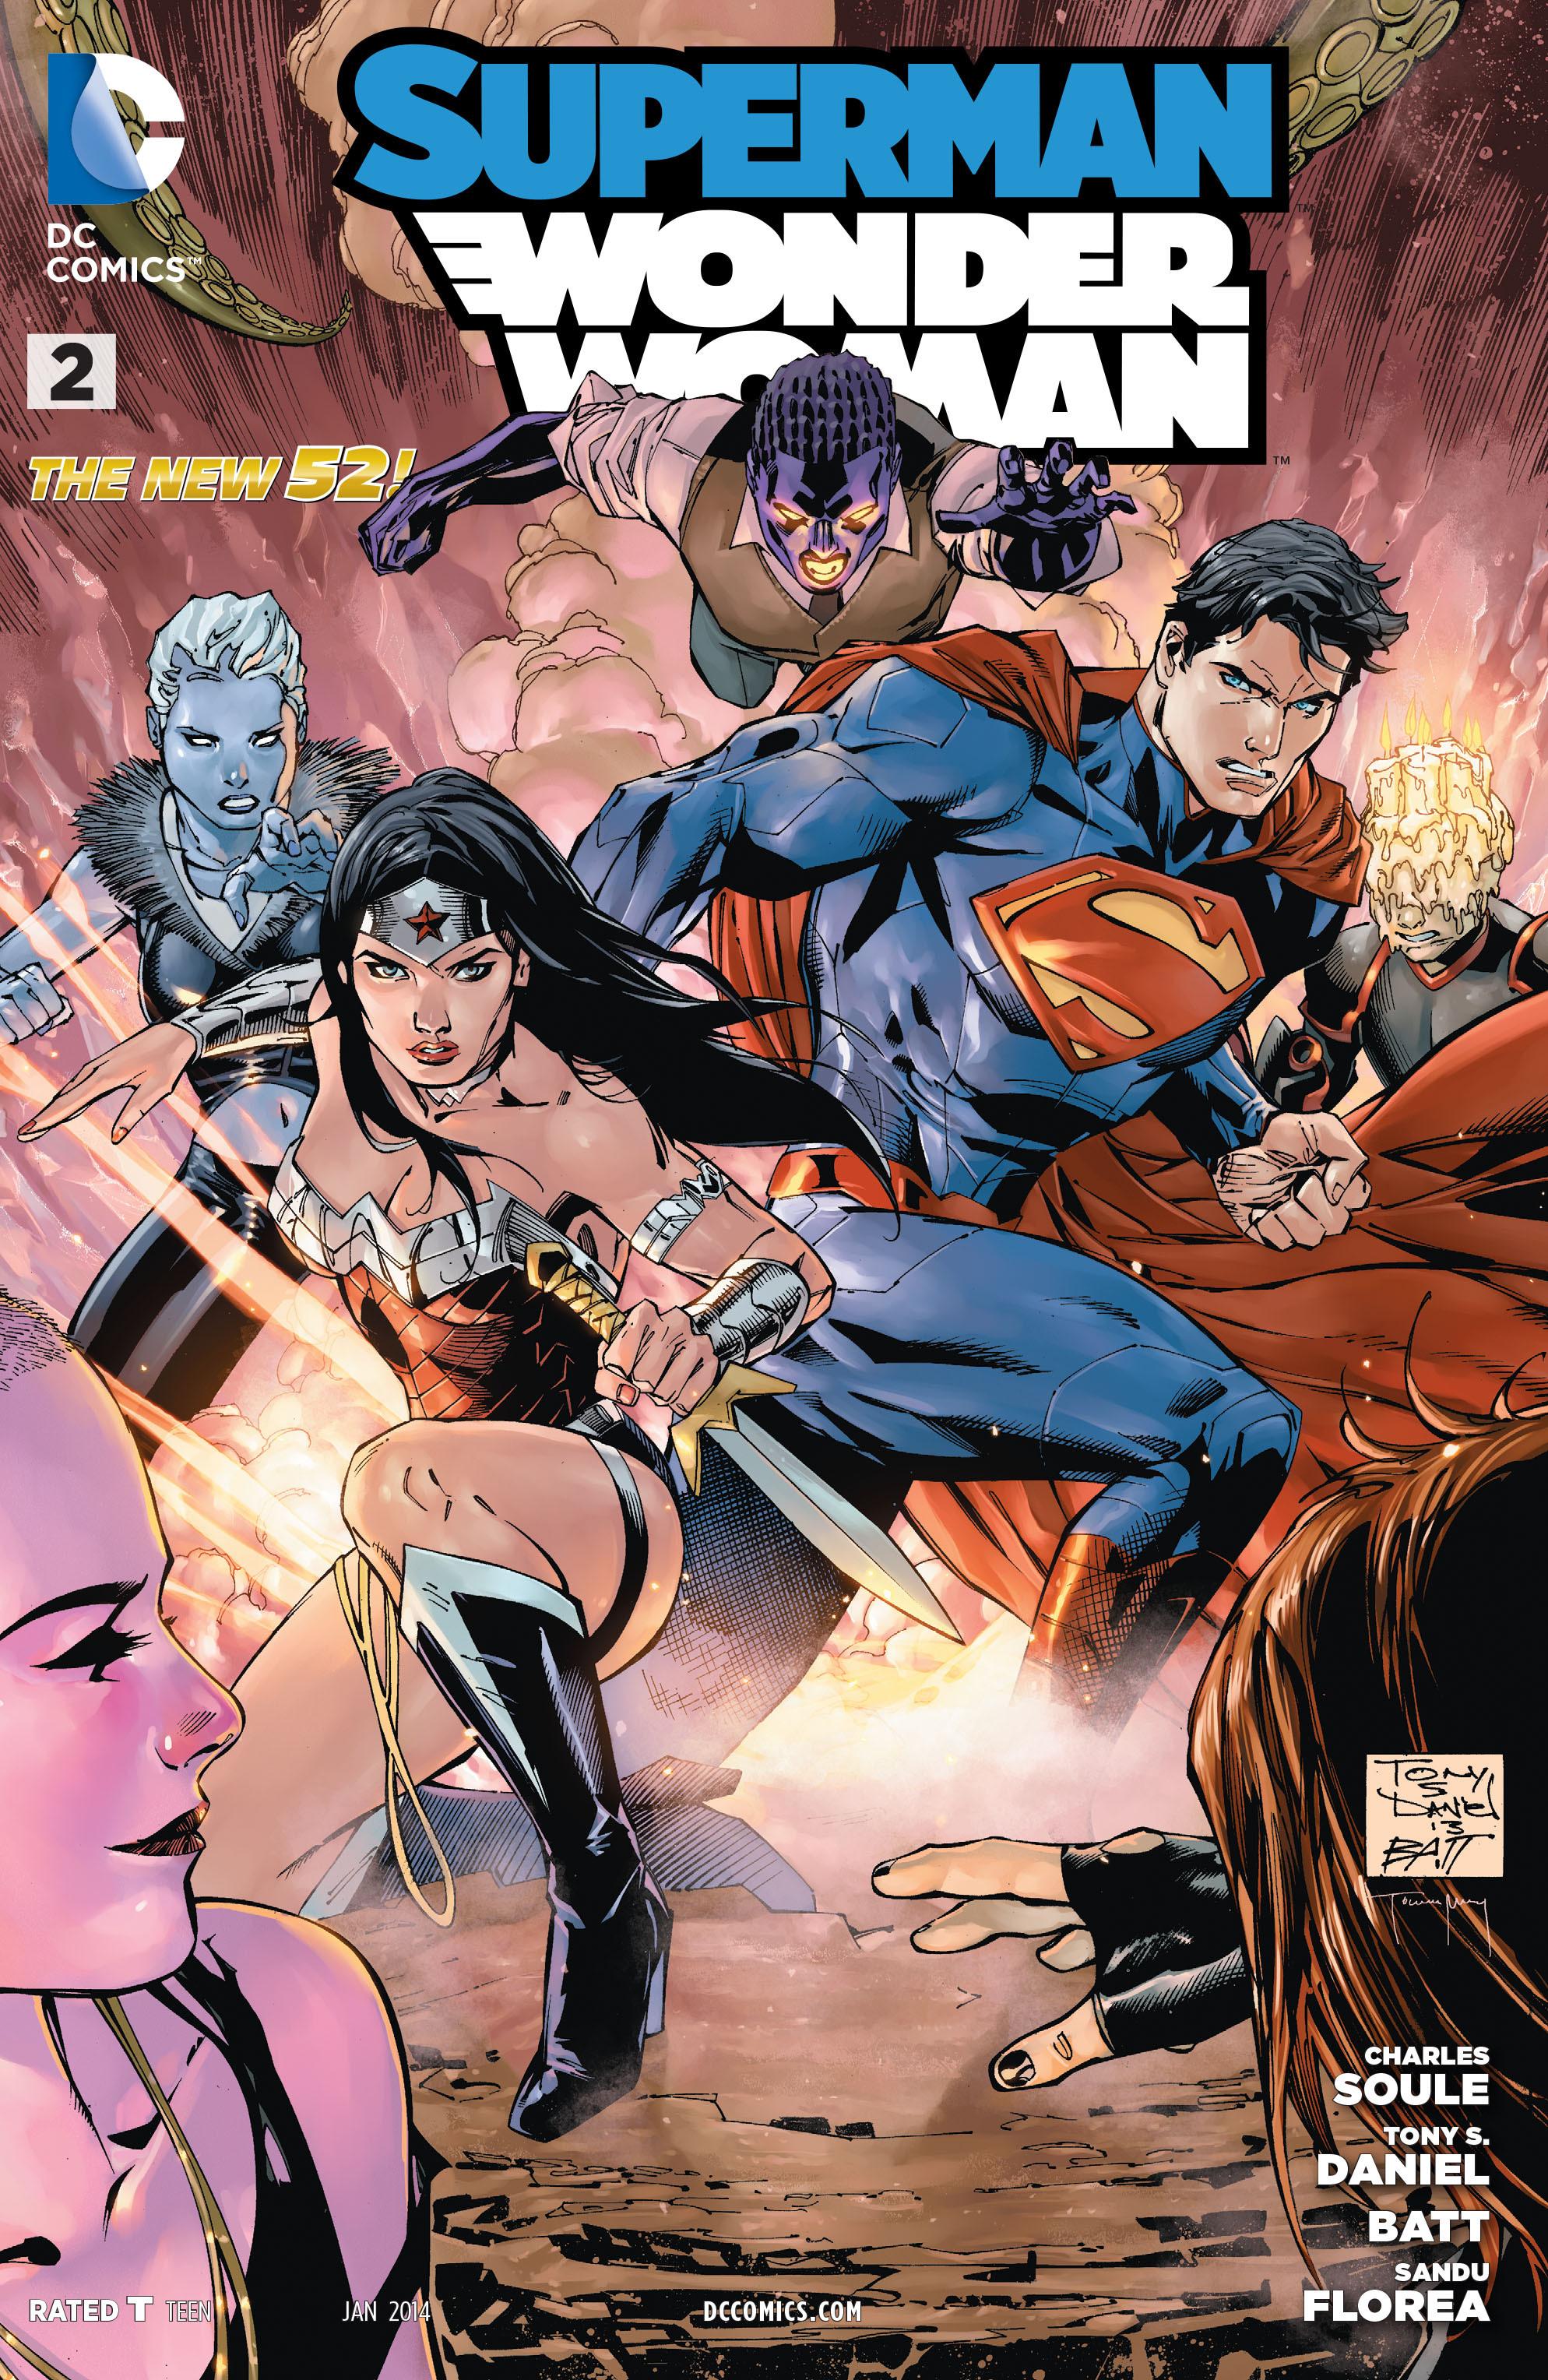 Superman/Wonder Woman Vol. 1 #2